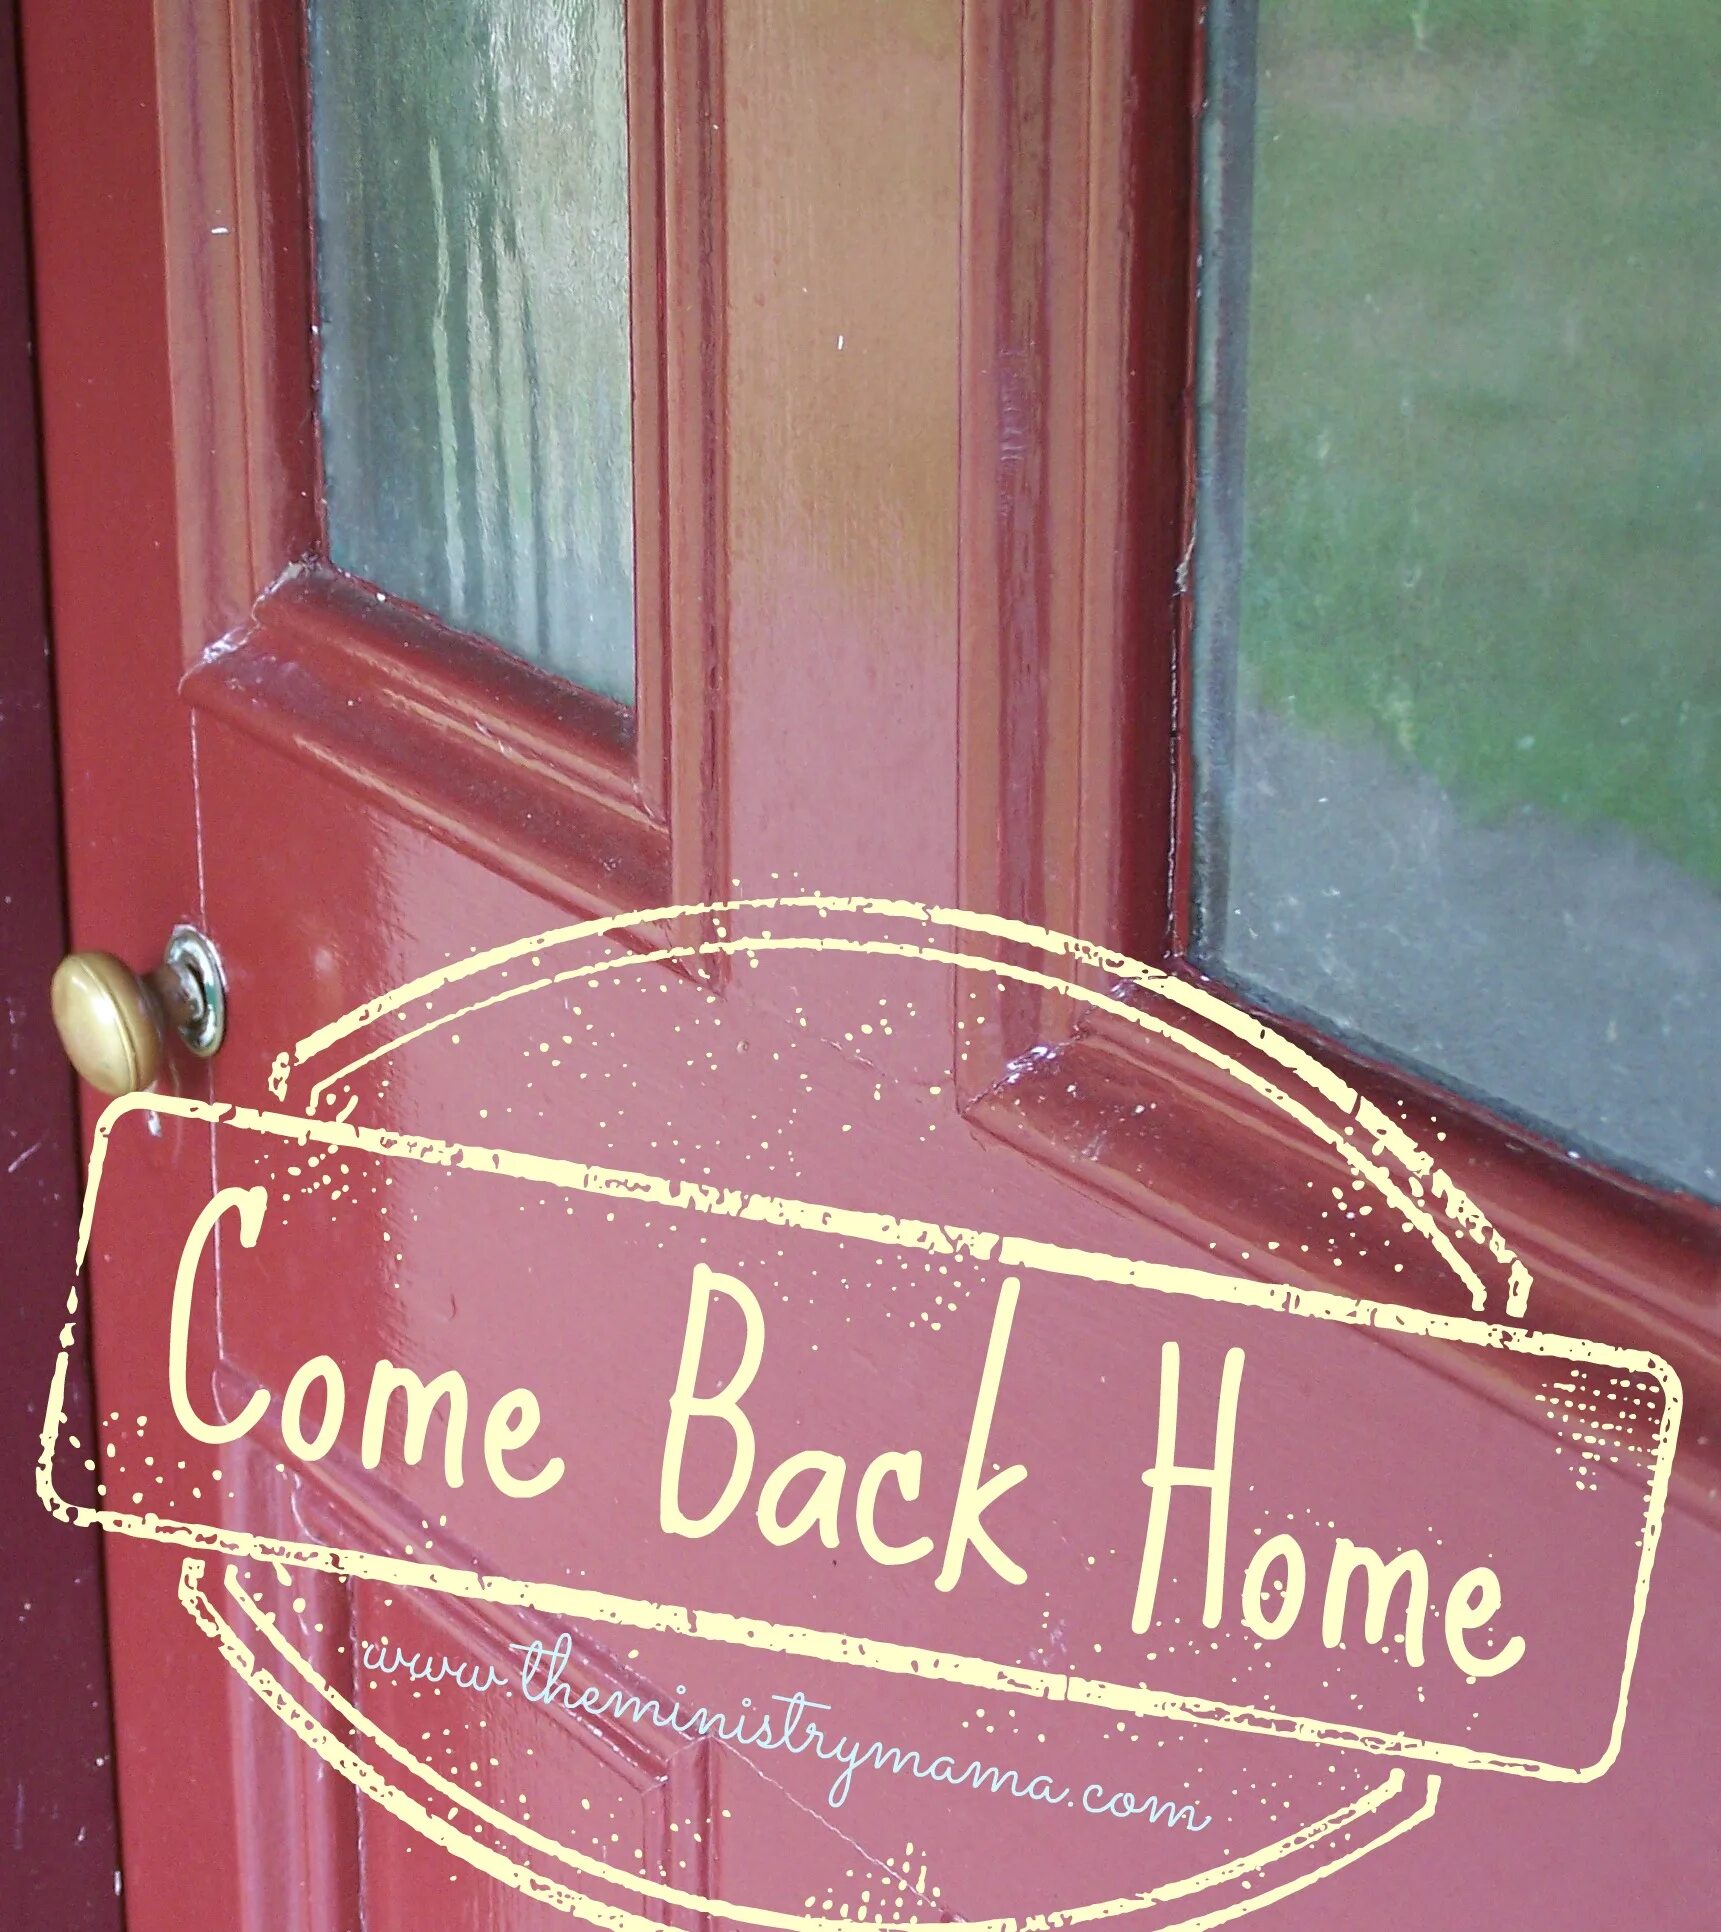 Come back картинка для детей. Back Home. Coming back Home. Come Home. He comes back home